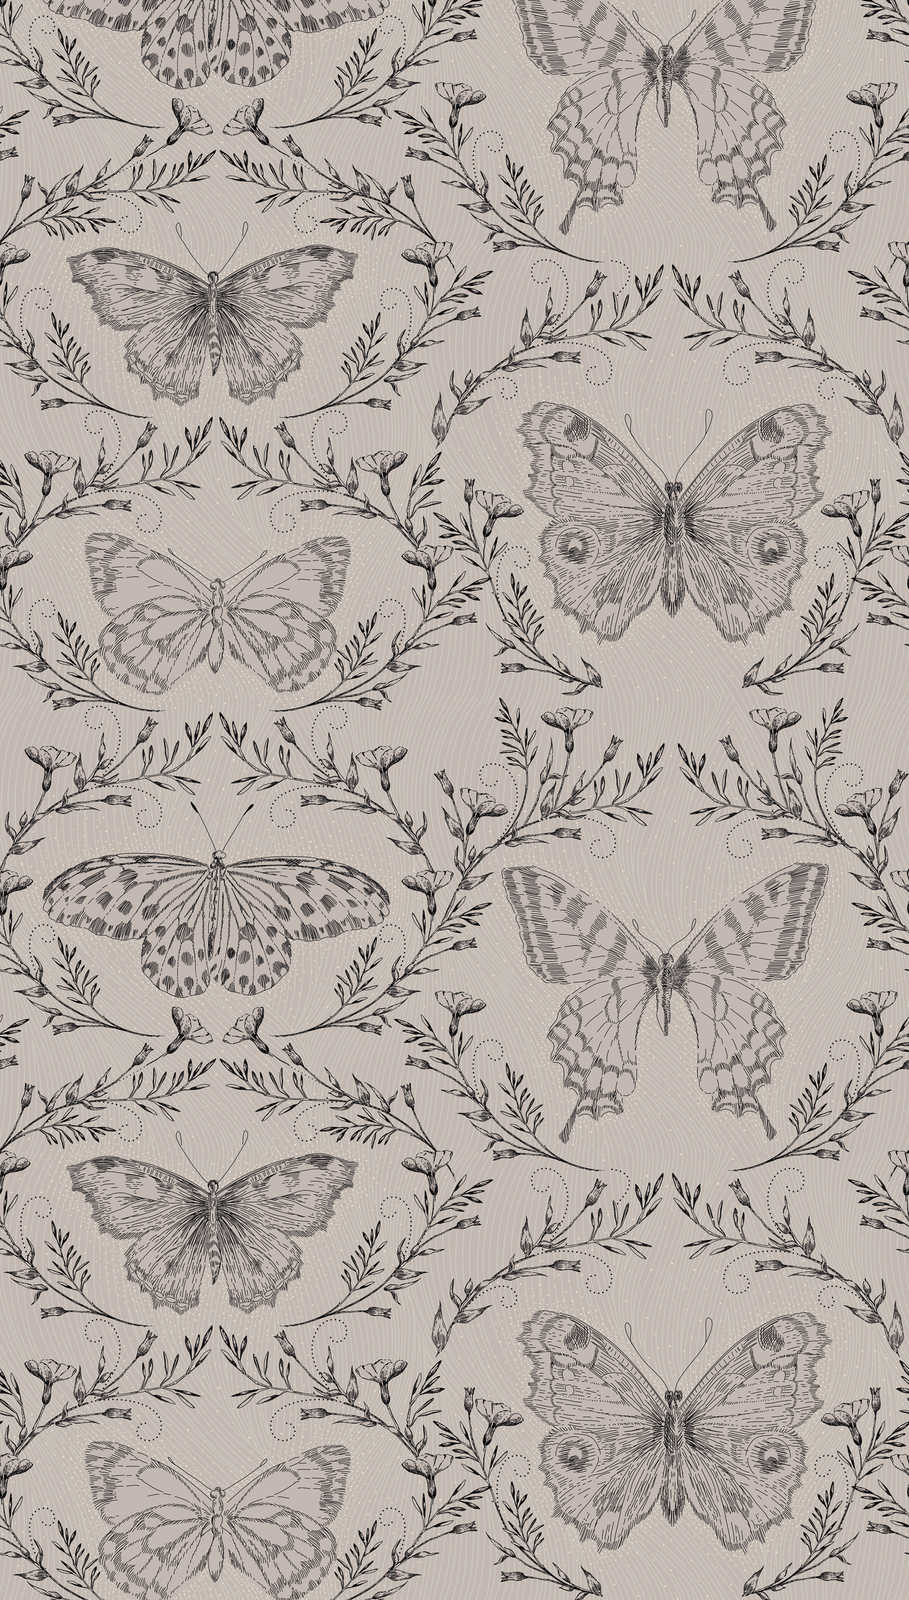             Butterfly wallpaper with vines in a dark design - grey, greige, black
        